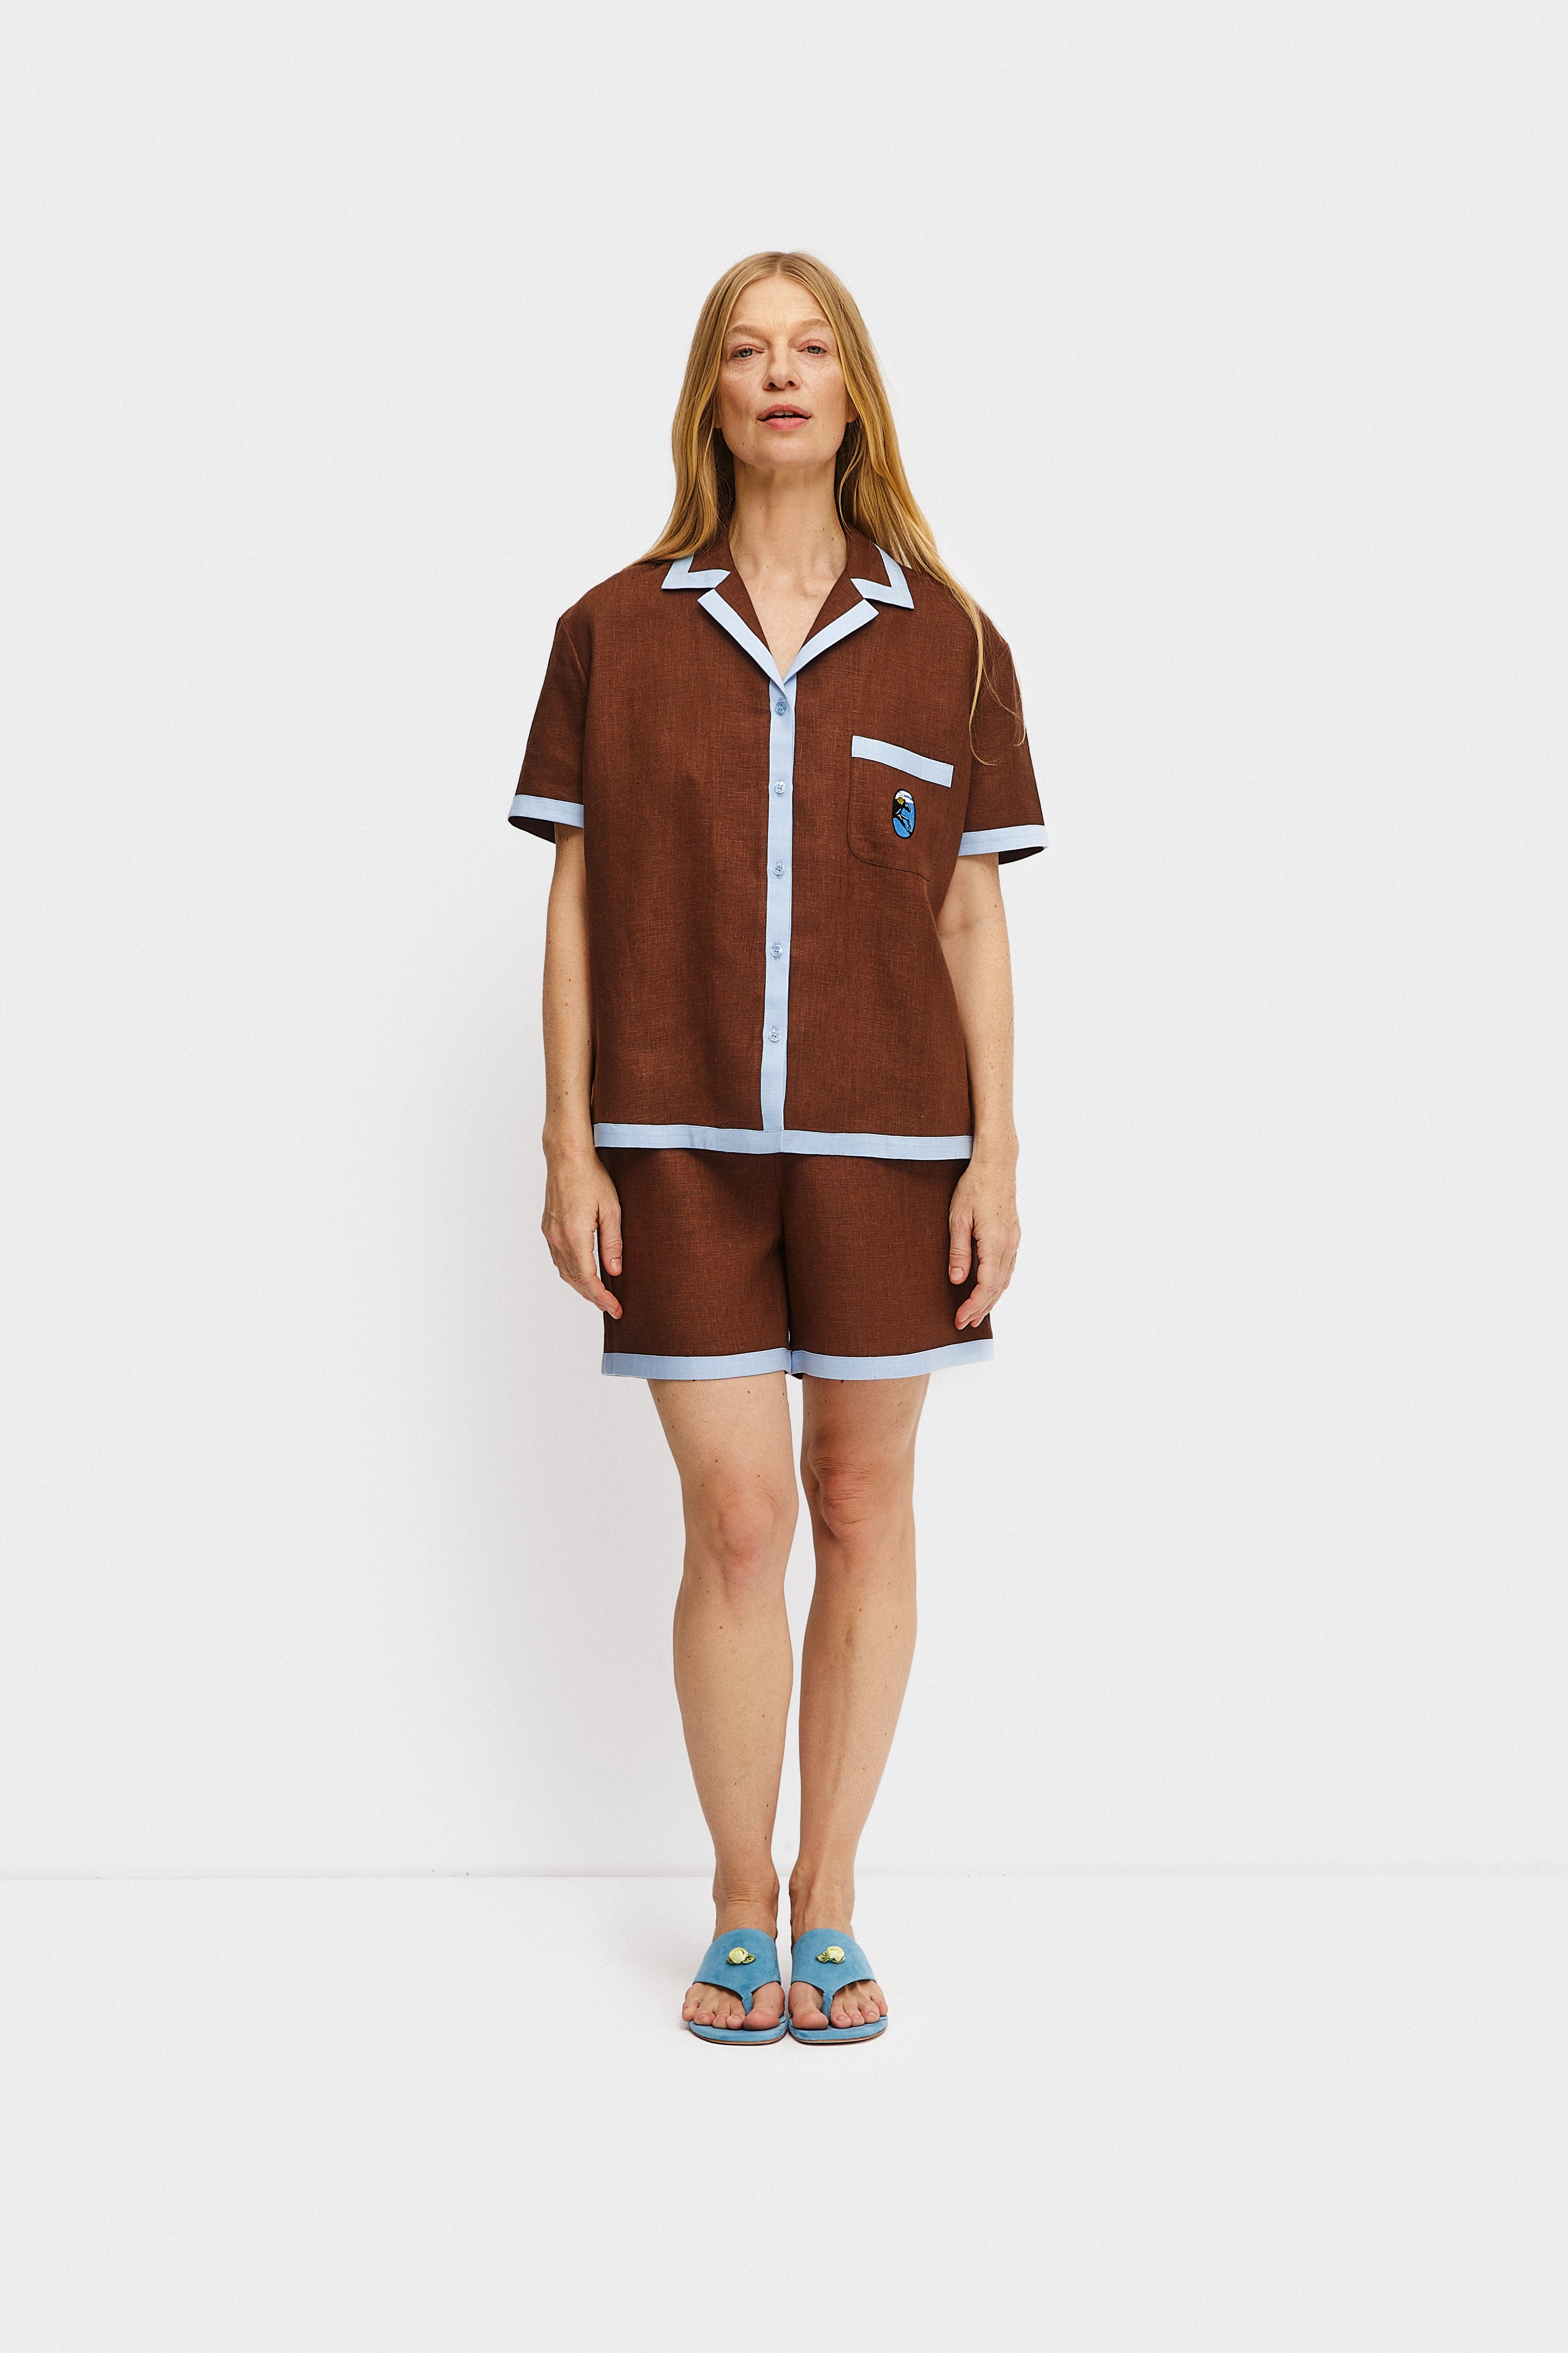 Garrick Embroidered Linen Short Sleeved Shirt in Brown